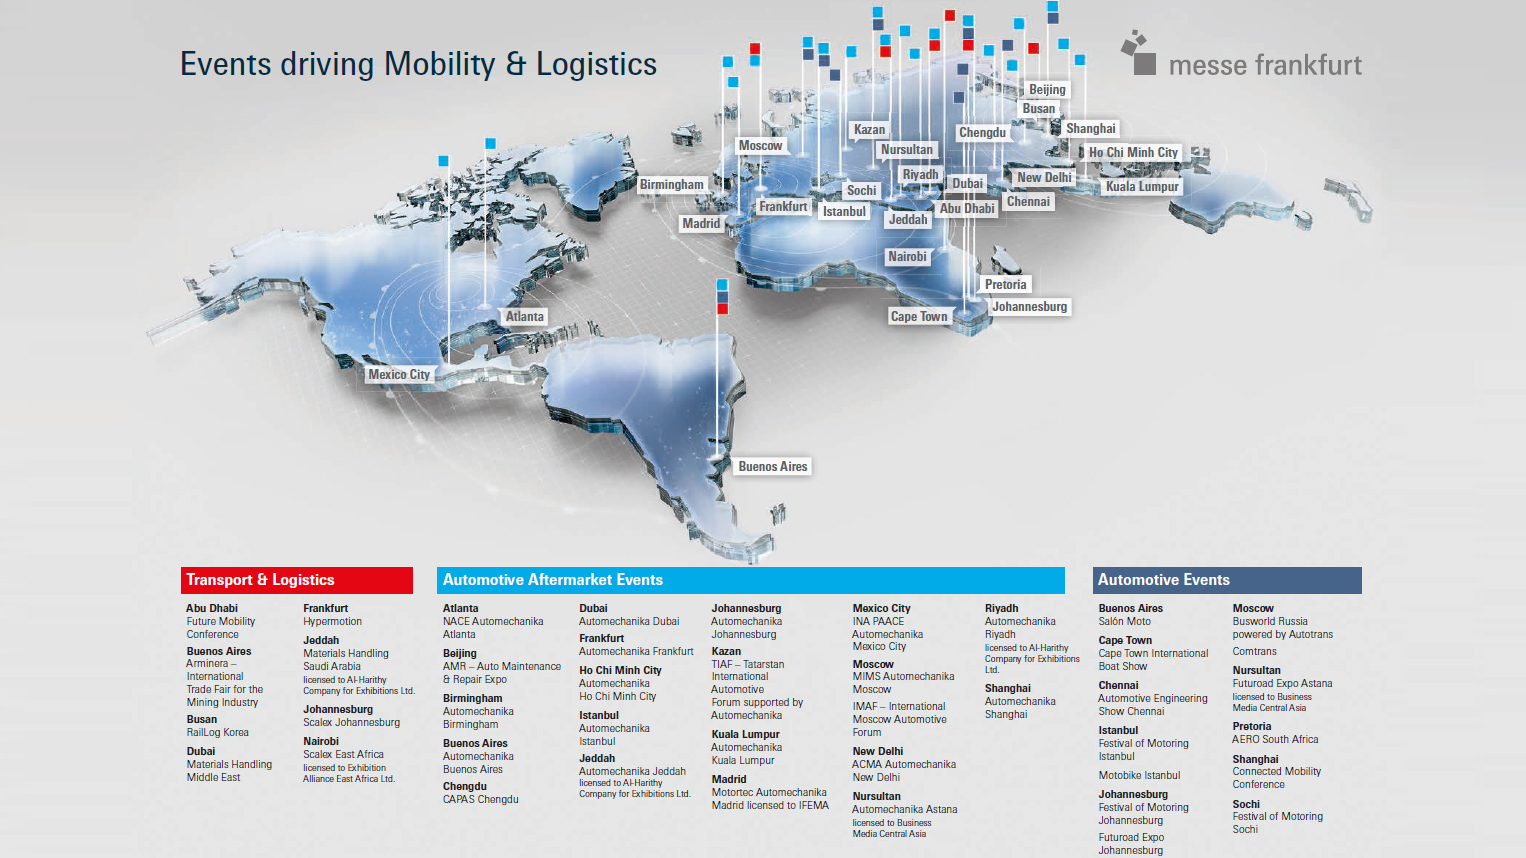 Mobility & Logistics